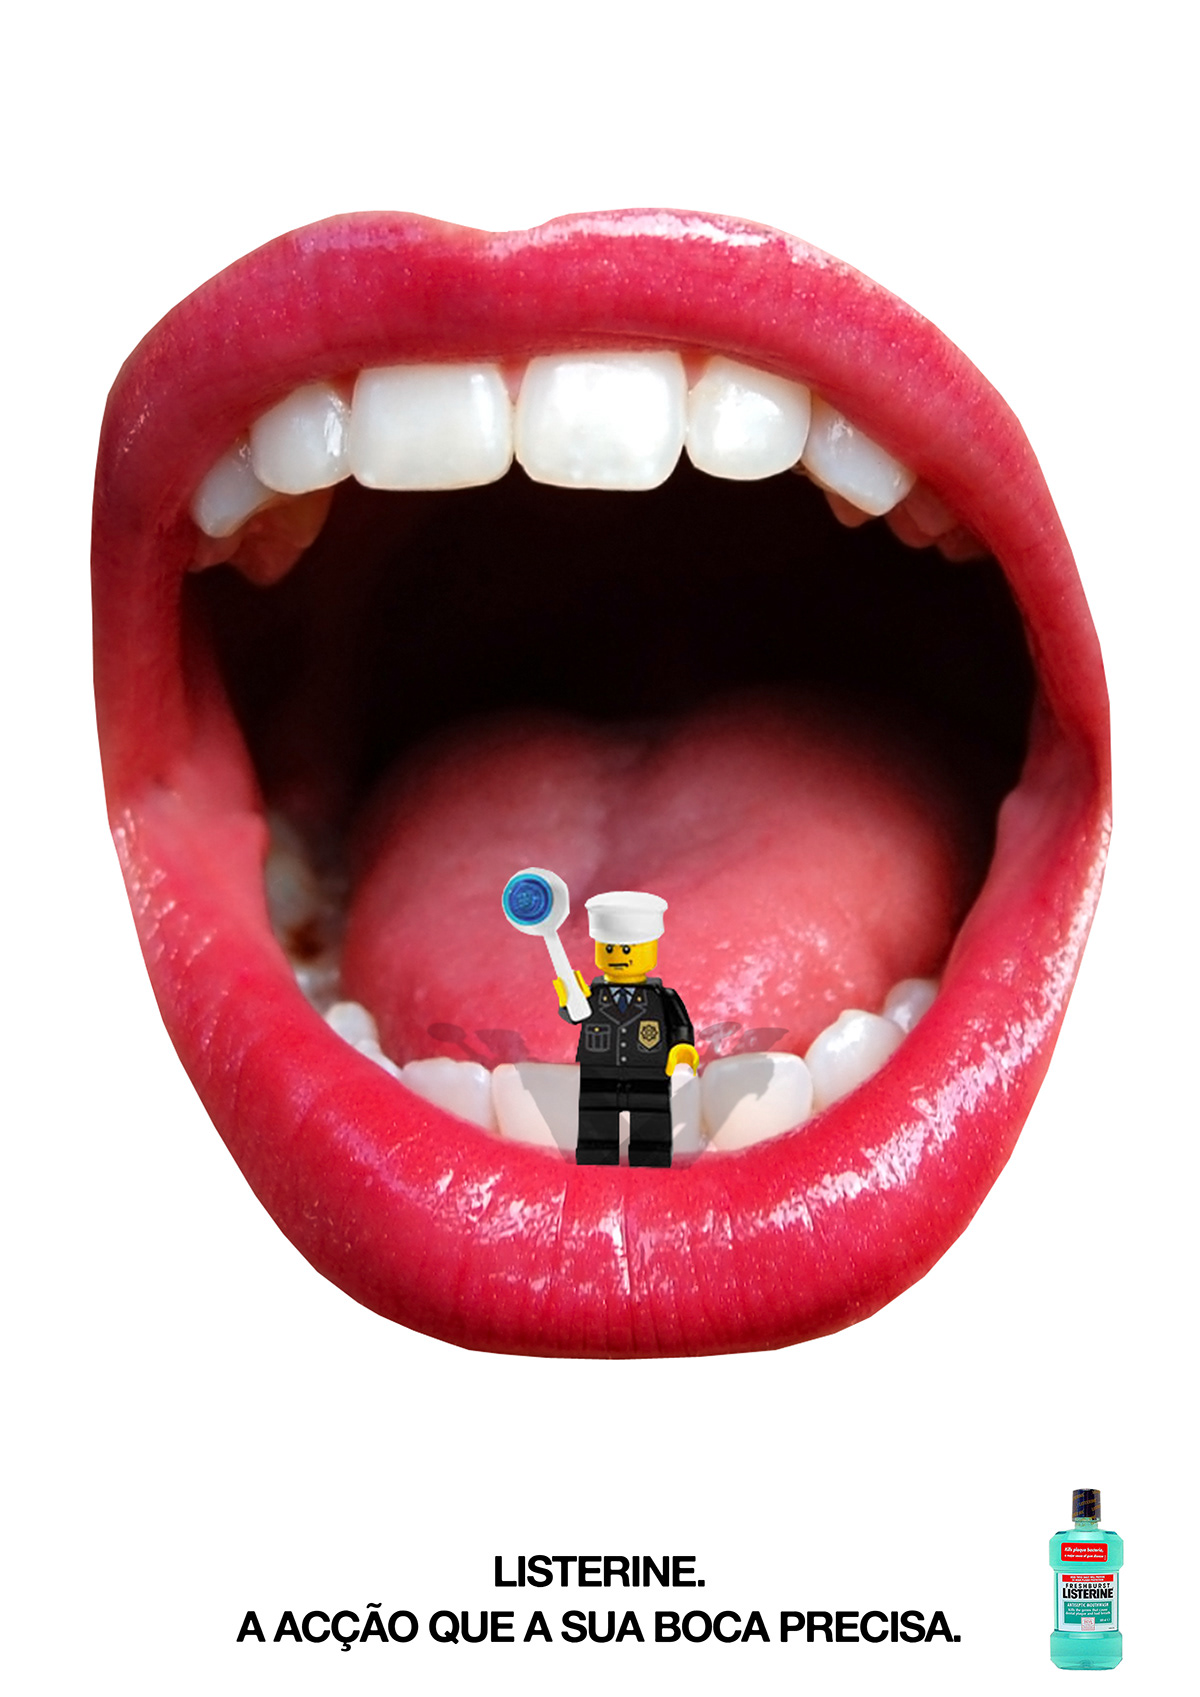 listerine mupi billboard action Mouth LEGO oral